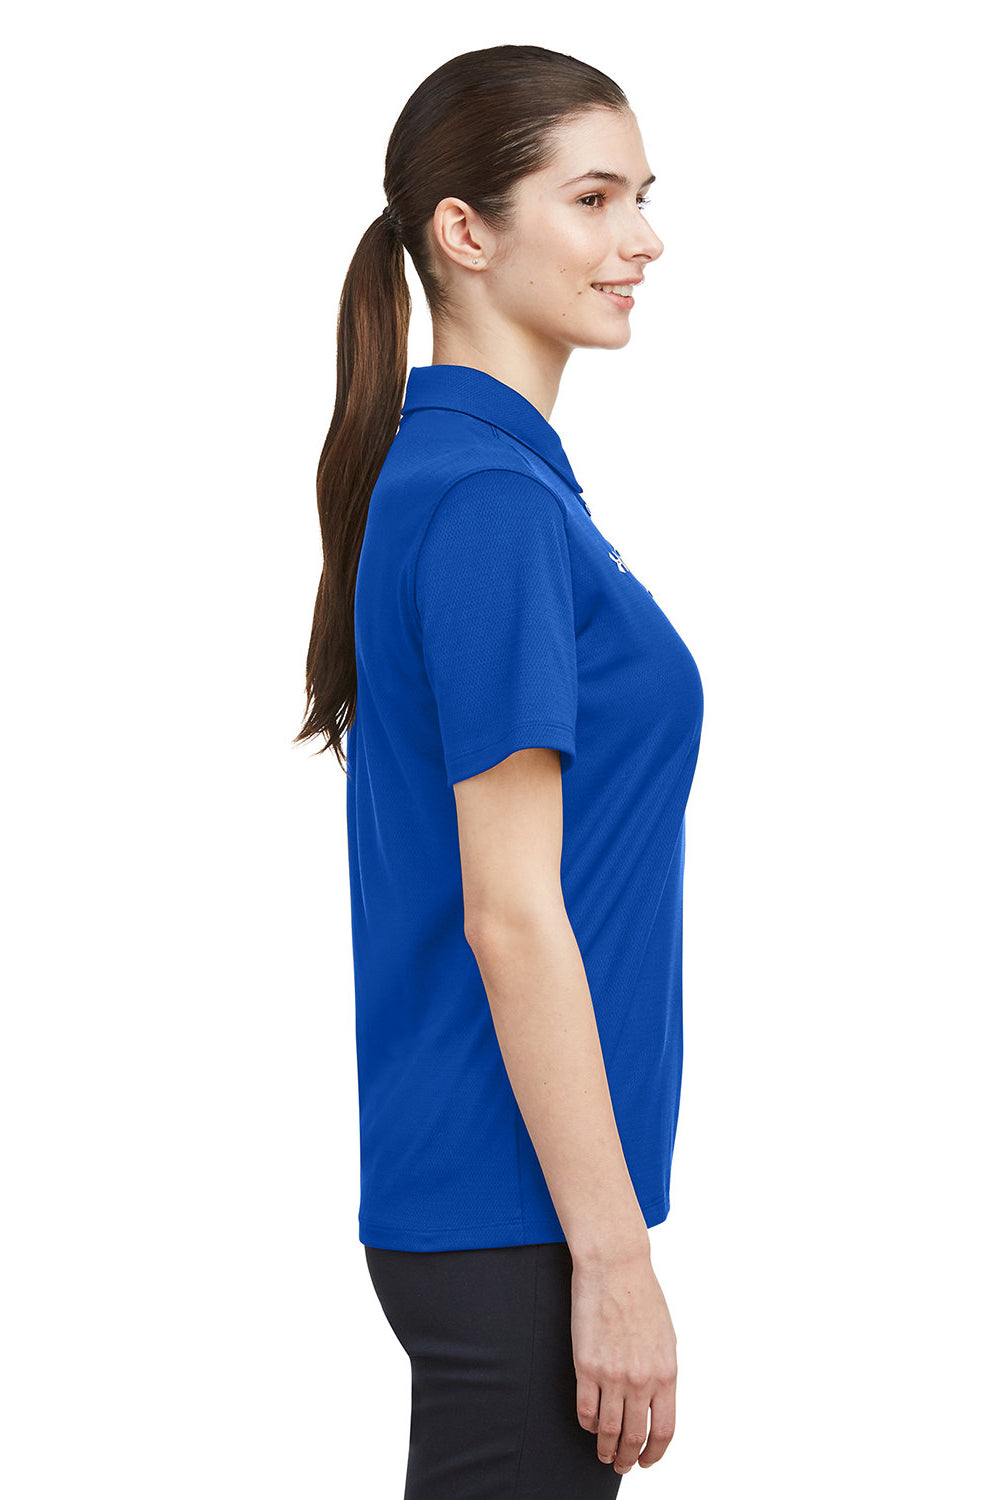 Under Armour 1370431 Womens Tech Moisture Wicking Short Sleeve Polo Shirt Royal Blue Model Side